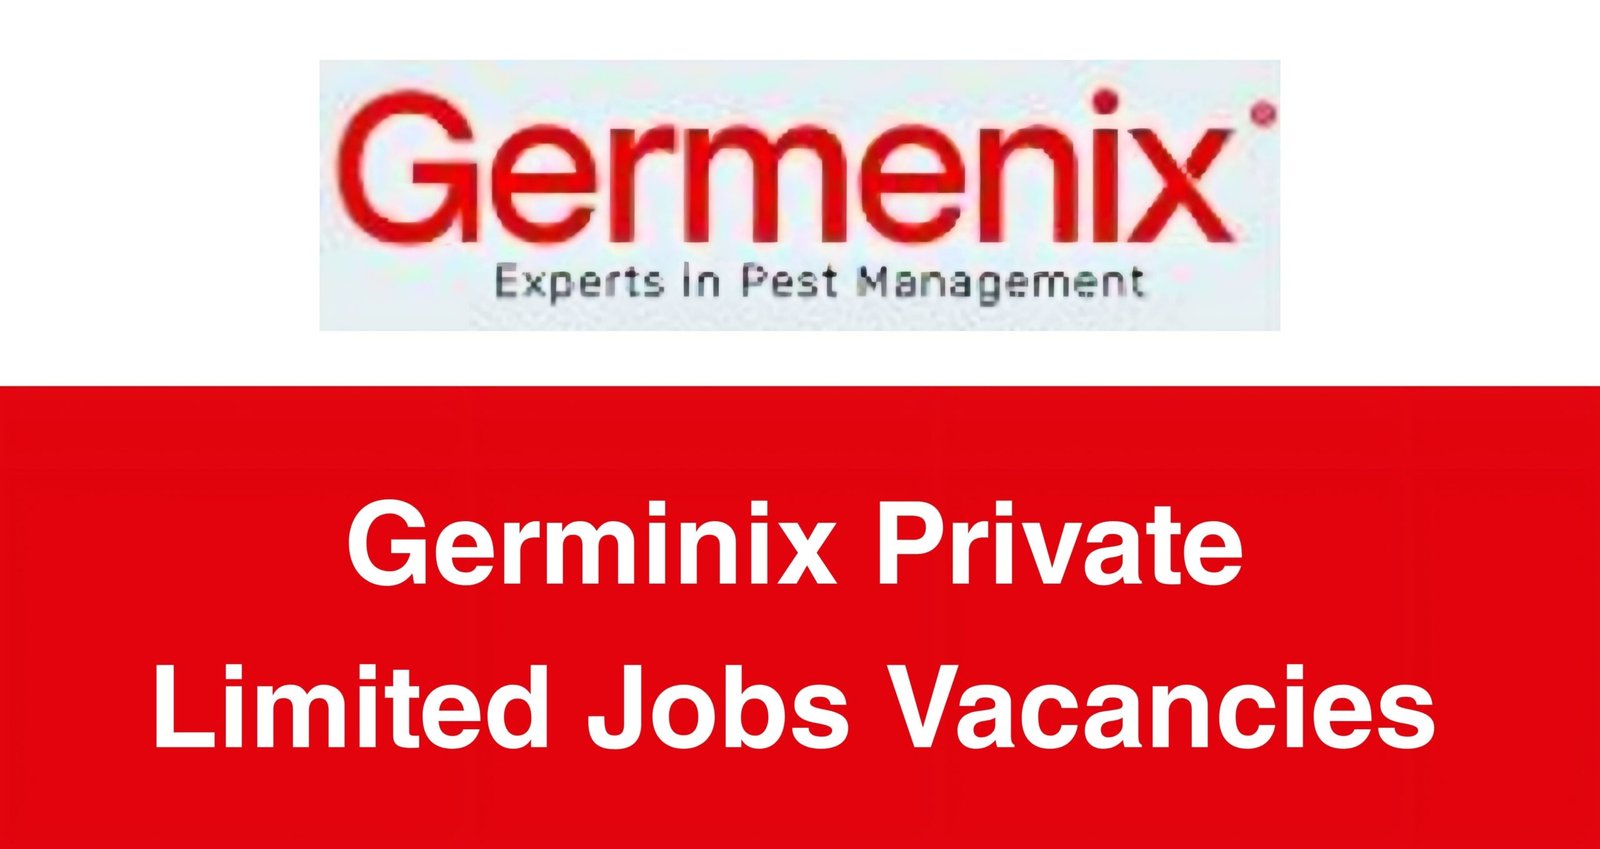 Germinix Private Limited Jobs Vacancies